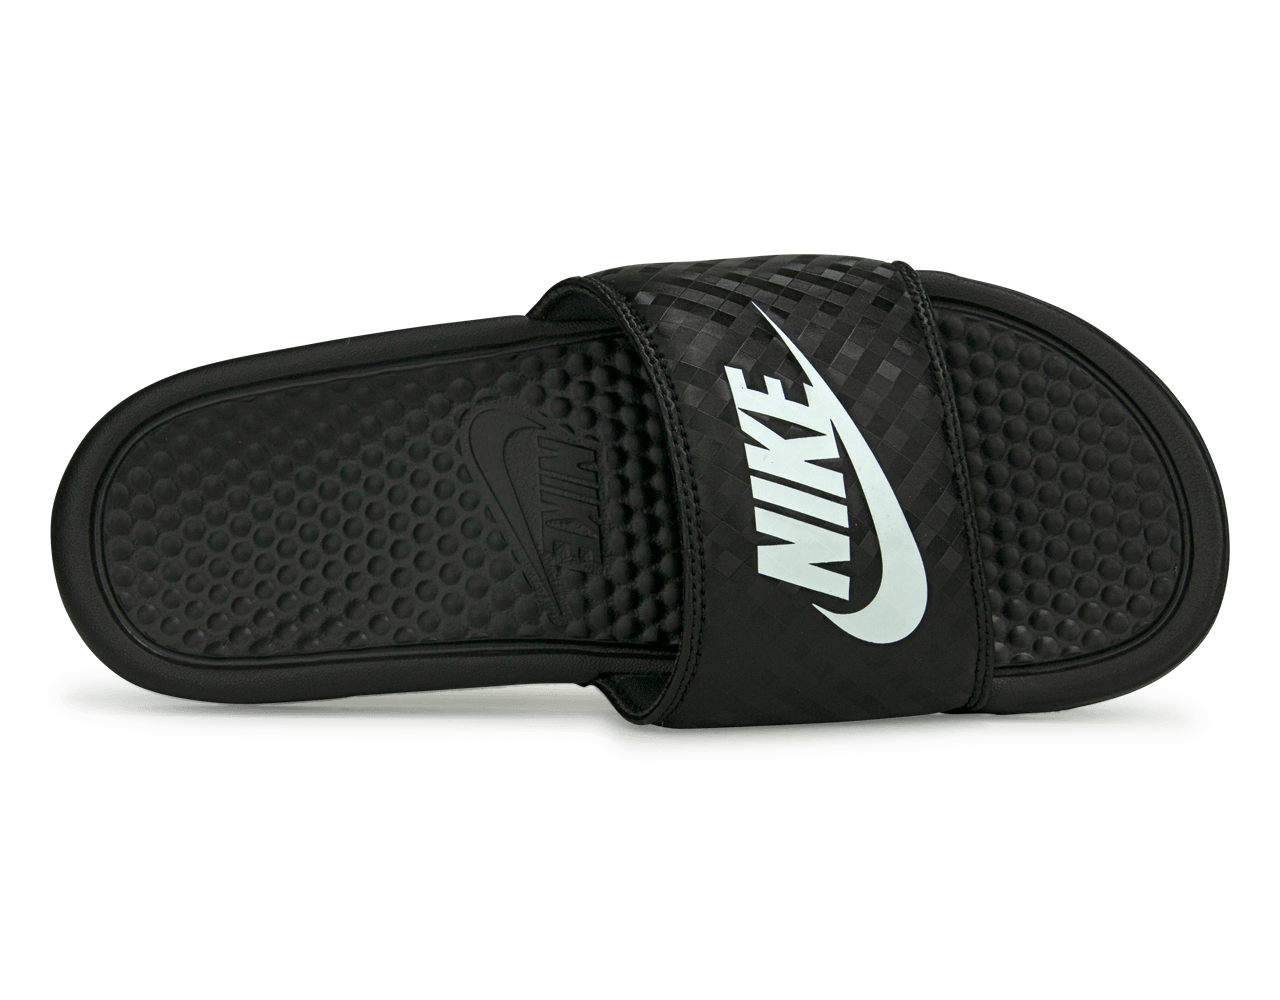 Nike Women's Benassi JDI Sandal Black/White Soleplate